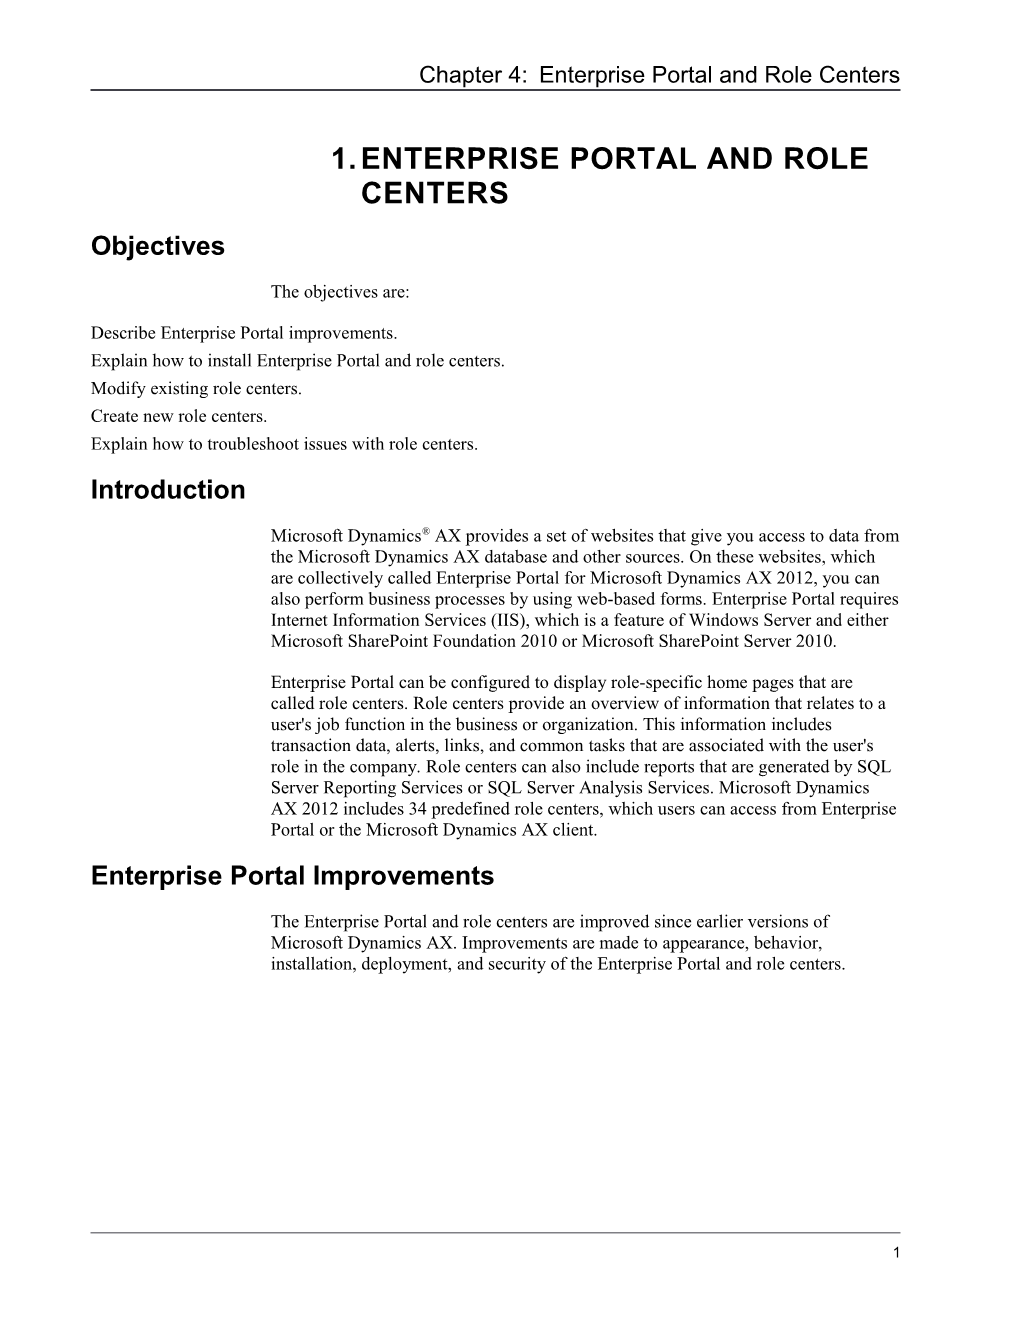 Chapter 4:Enterprise Portal and Role Centers